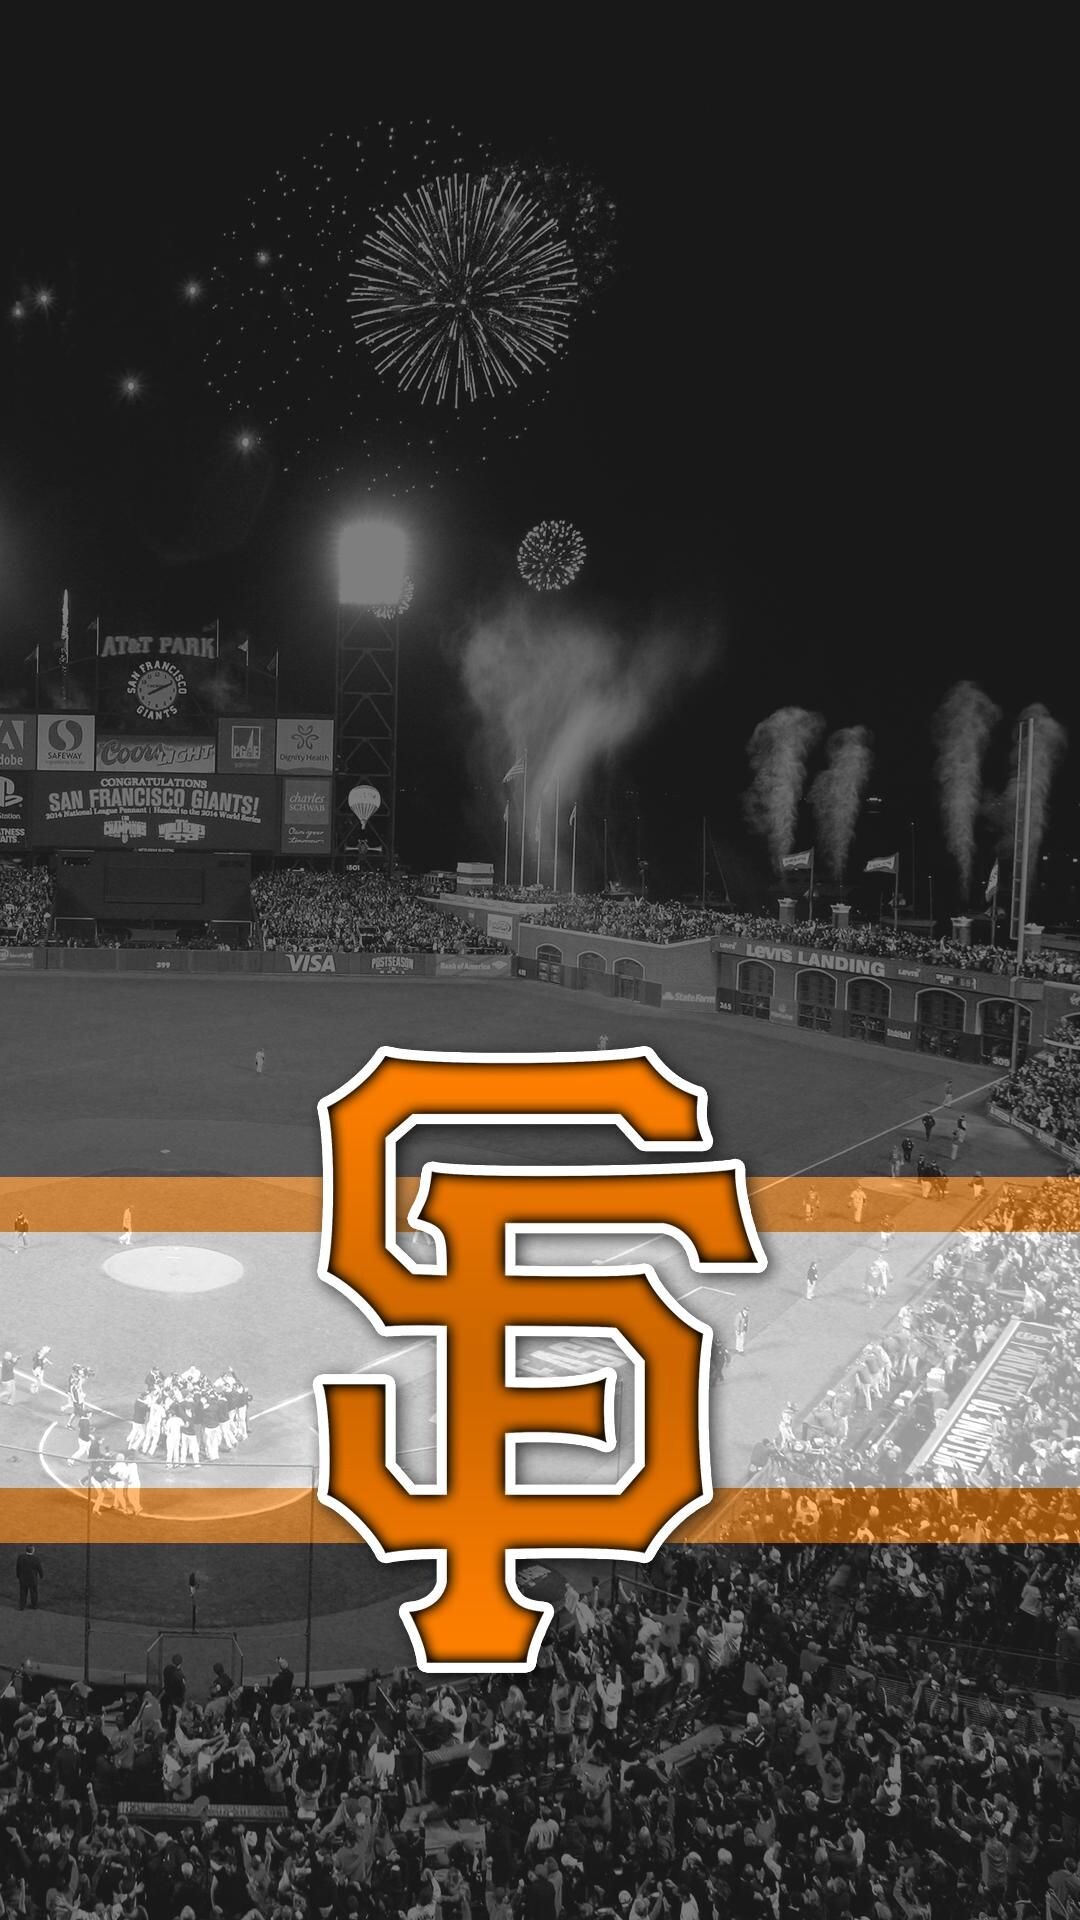 San Francisco Giants: Five-time World Series championships winners, The Baseball Hall of Fame members. 1080x1920 Full HD Wallpaper.